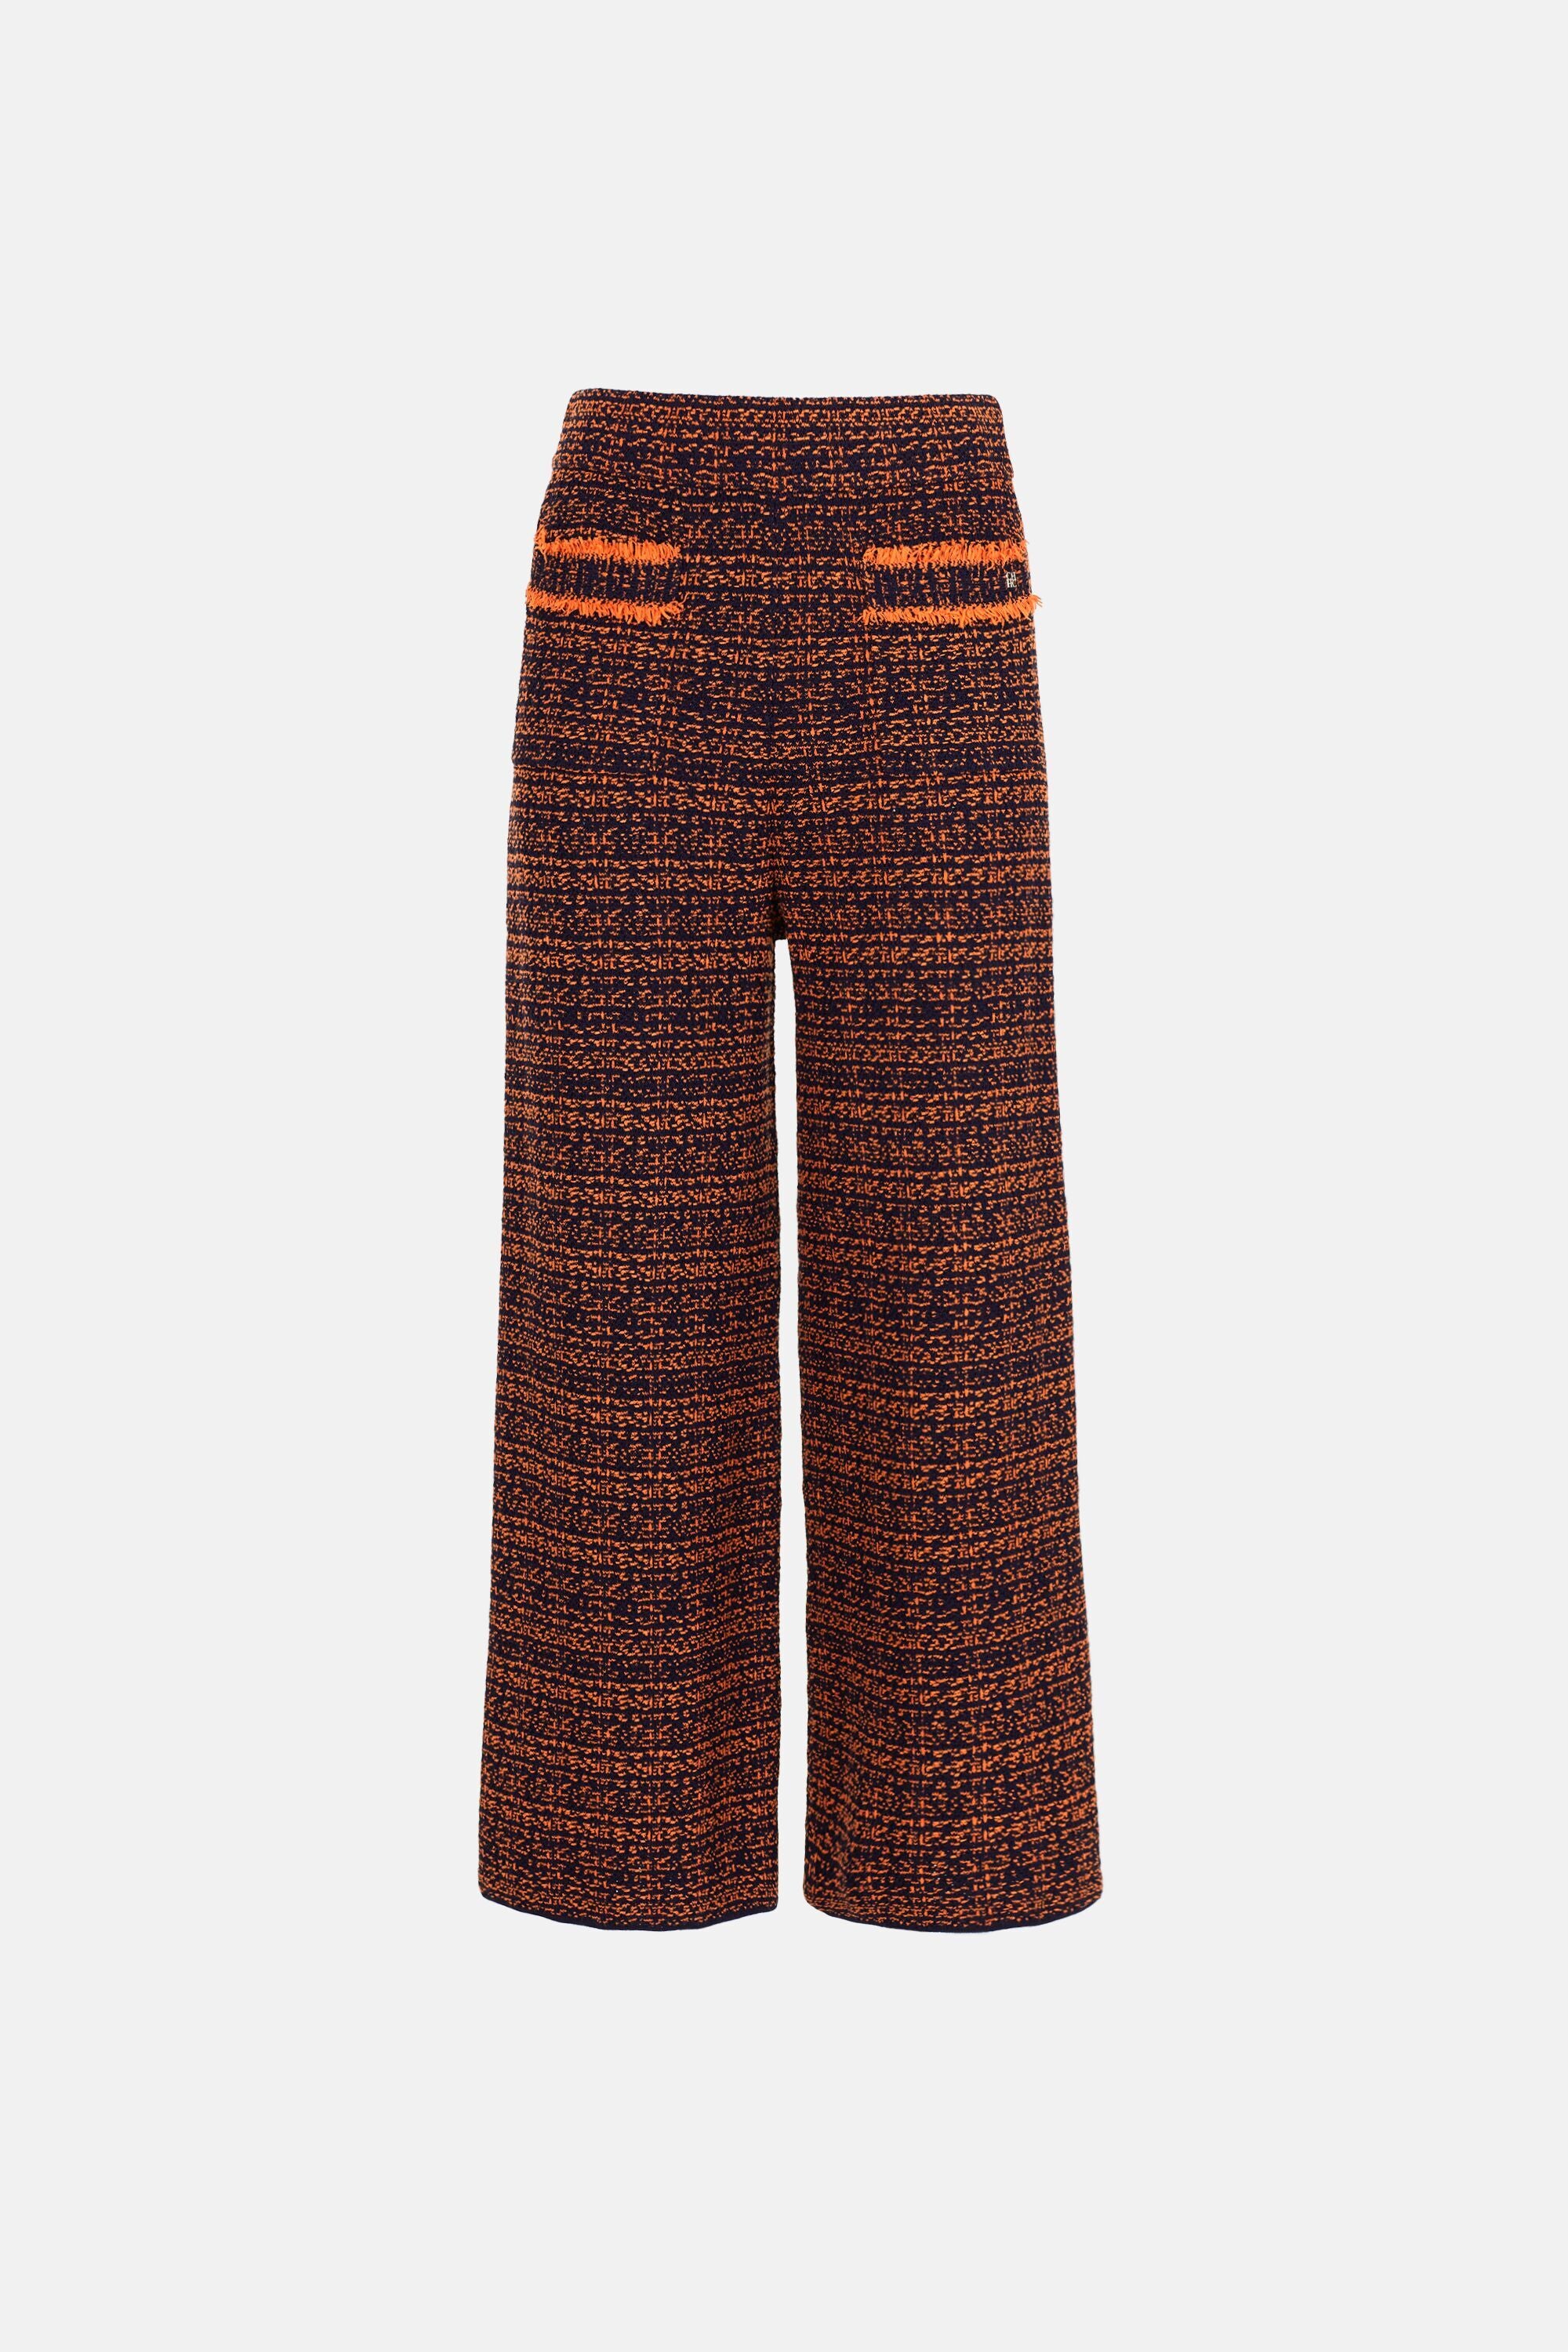 Frayed jacquard knit straight-leg pants navy/orange - CH Carolina